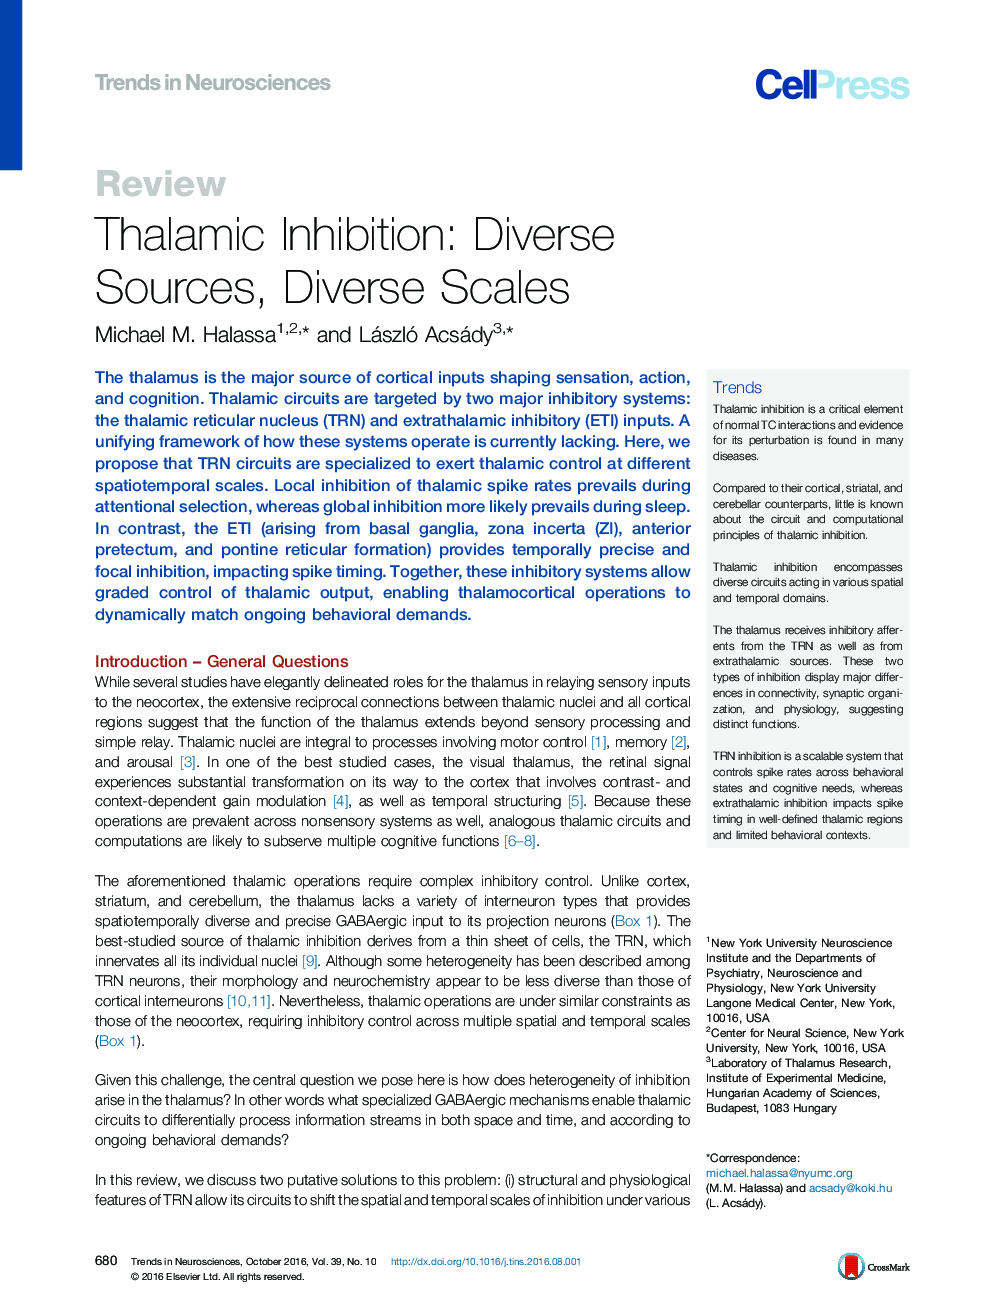 Thalamic Inhibition: Diverse Sources, Diverse Scales